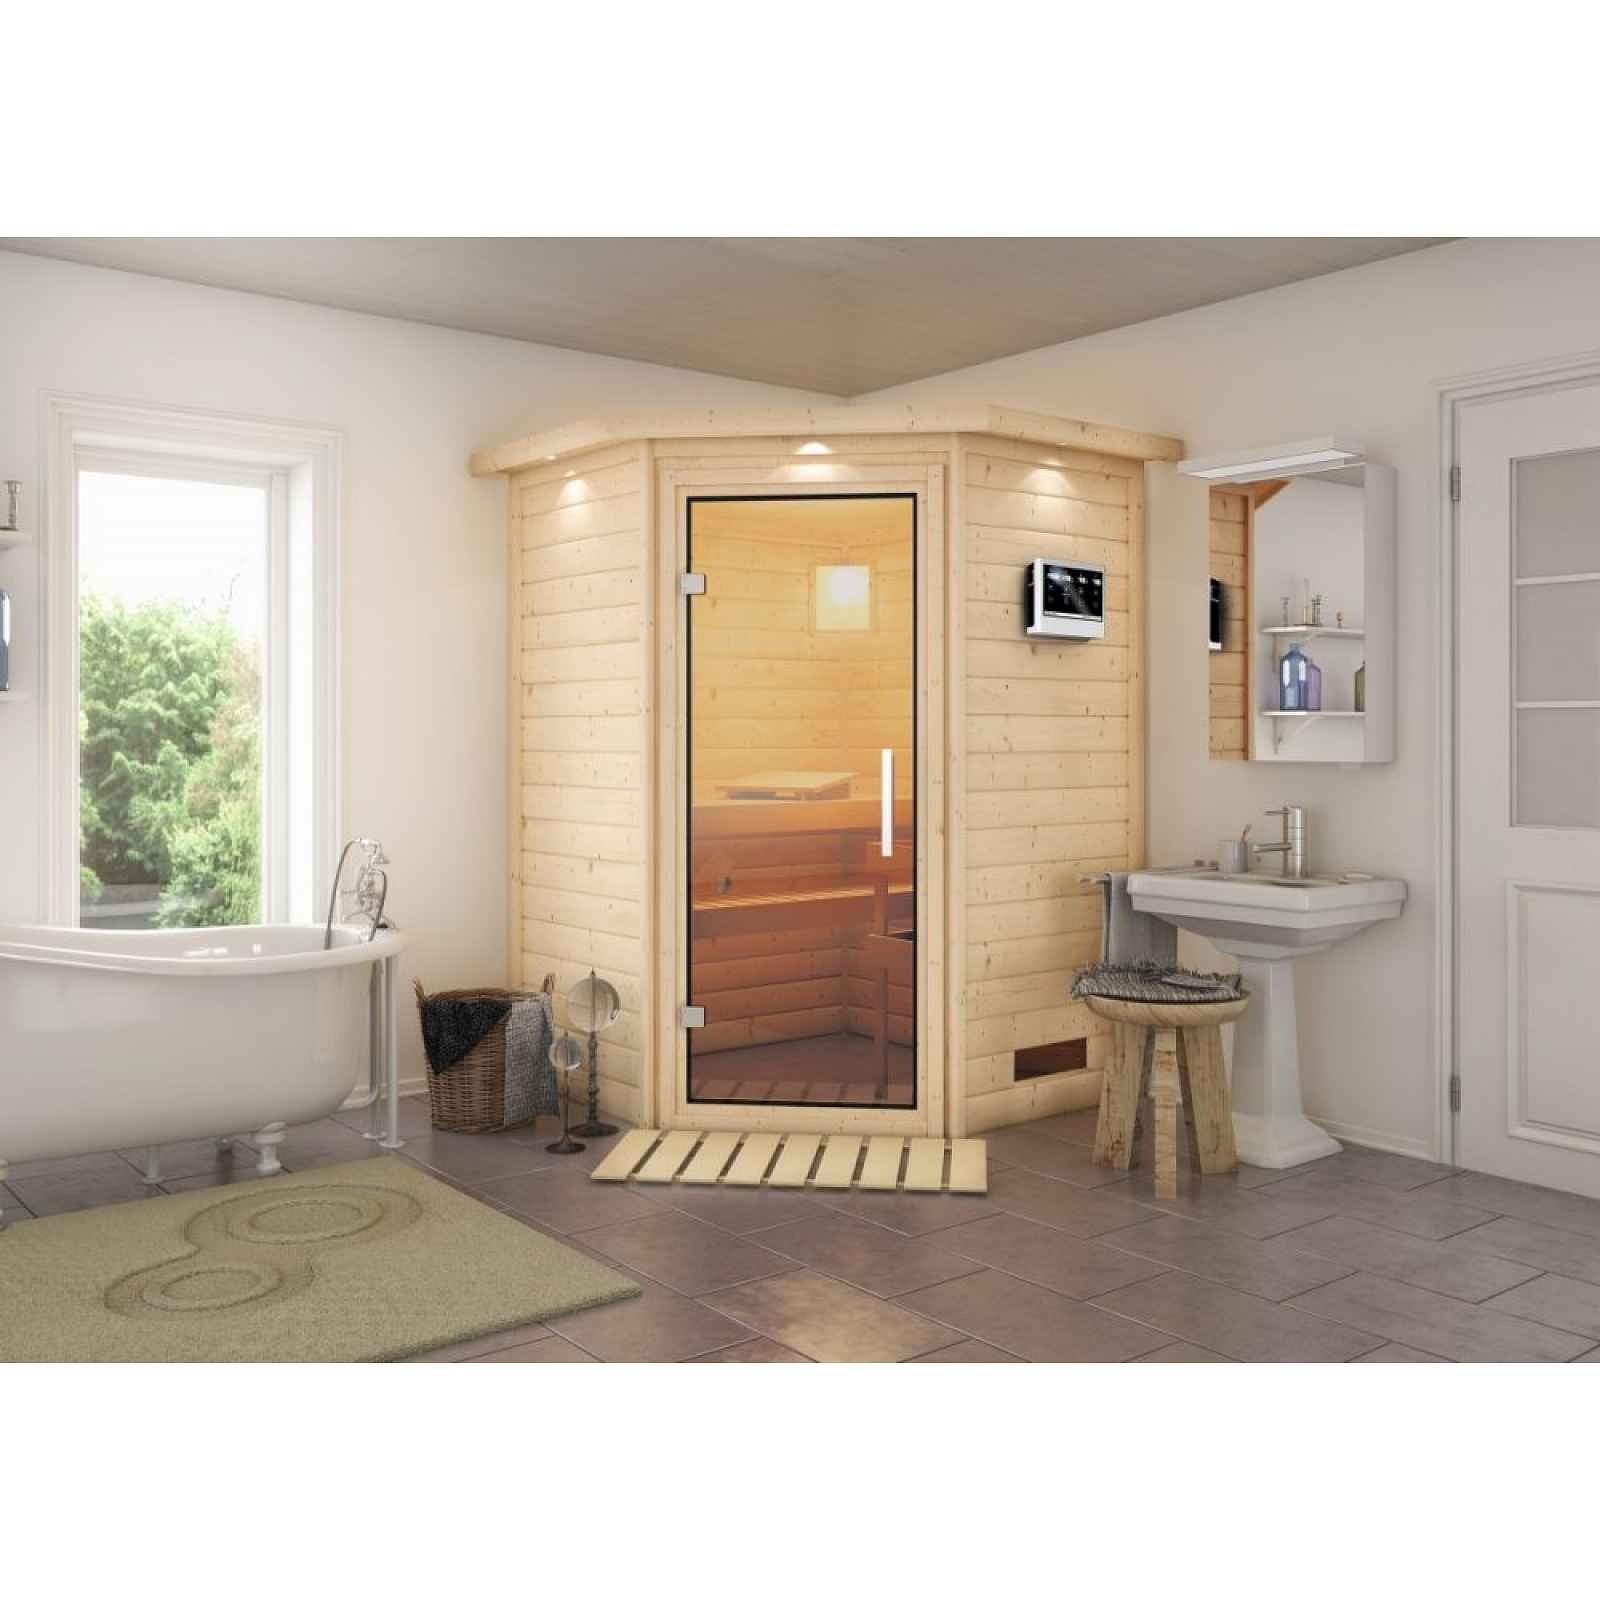 Malá interiérová finská sauna 146 x 146 cm